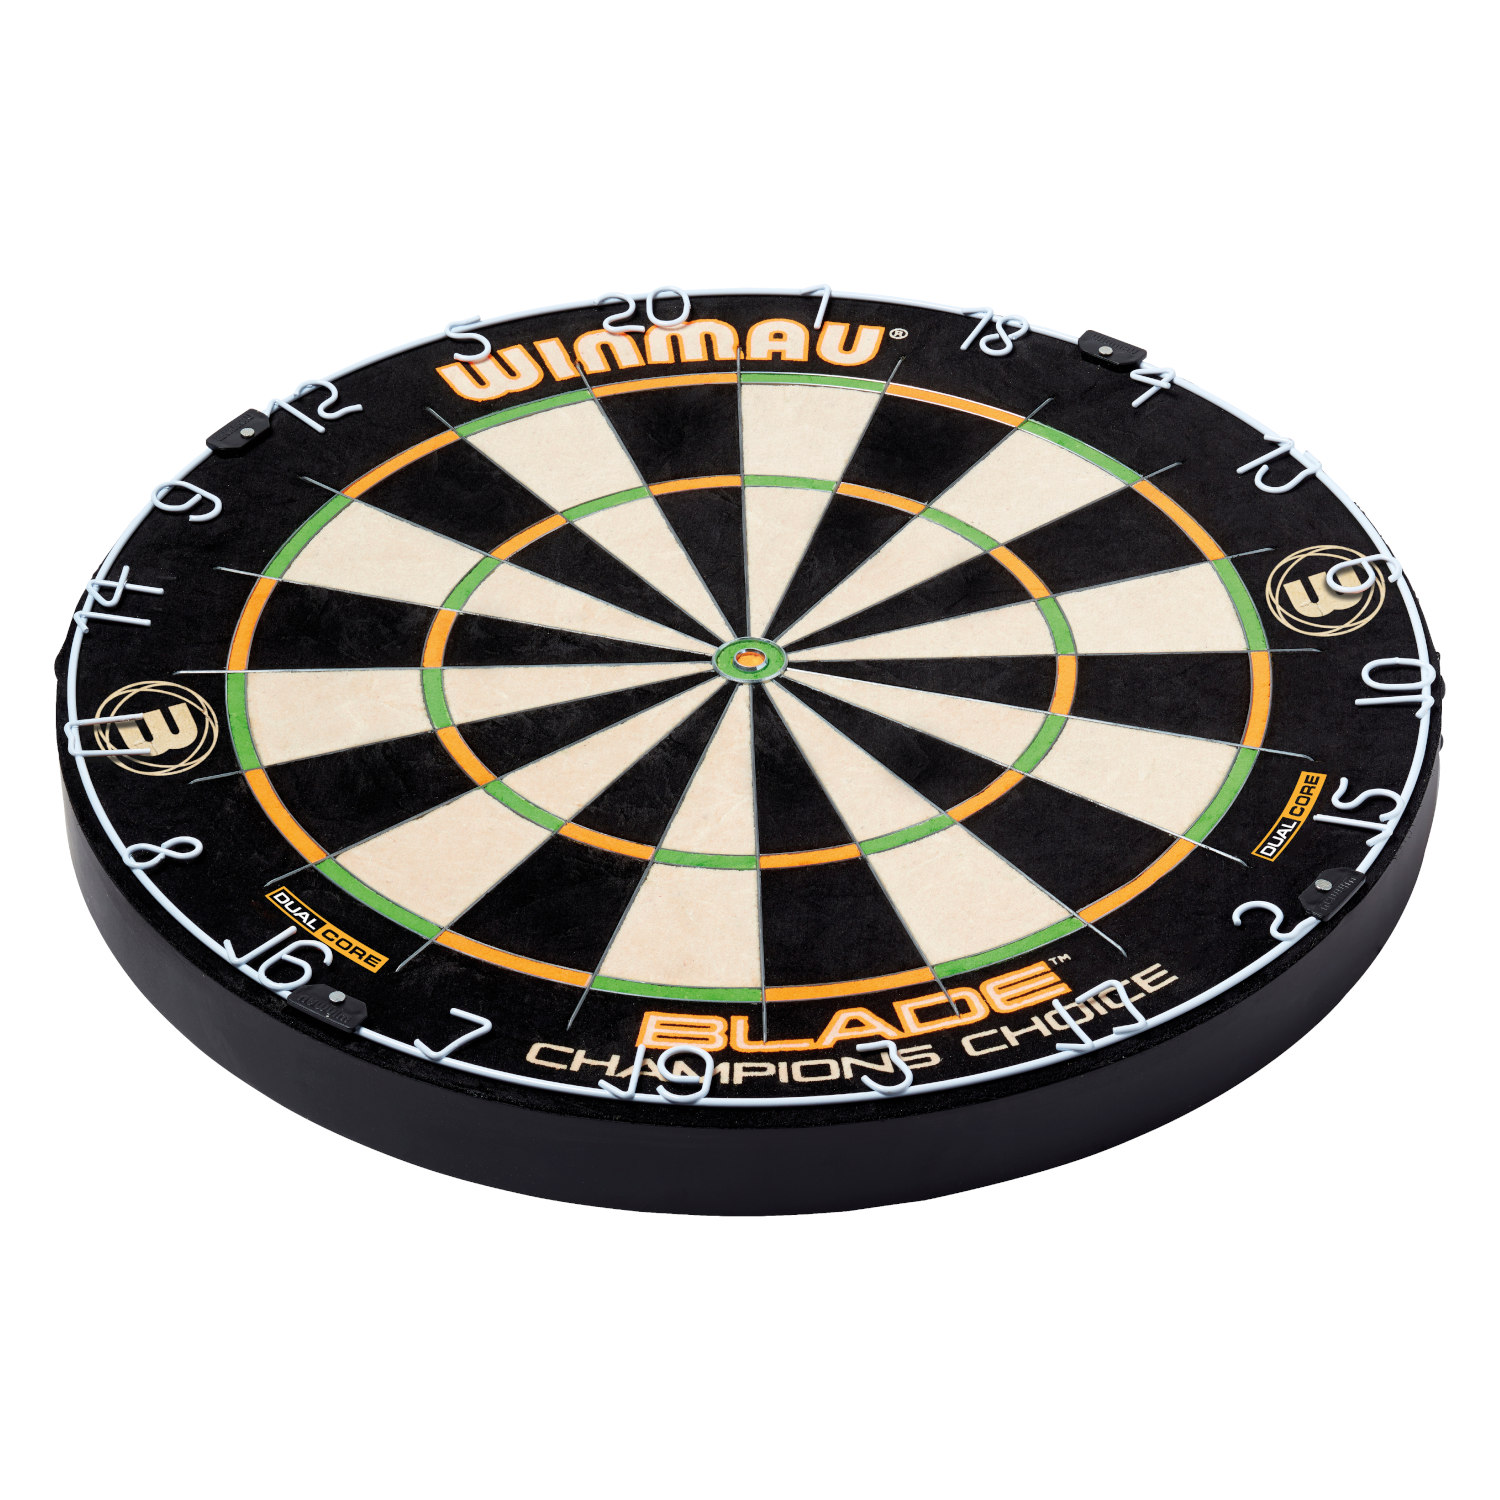 Winmau Blade Champions Choice Dual Core dartbord | Pro